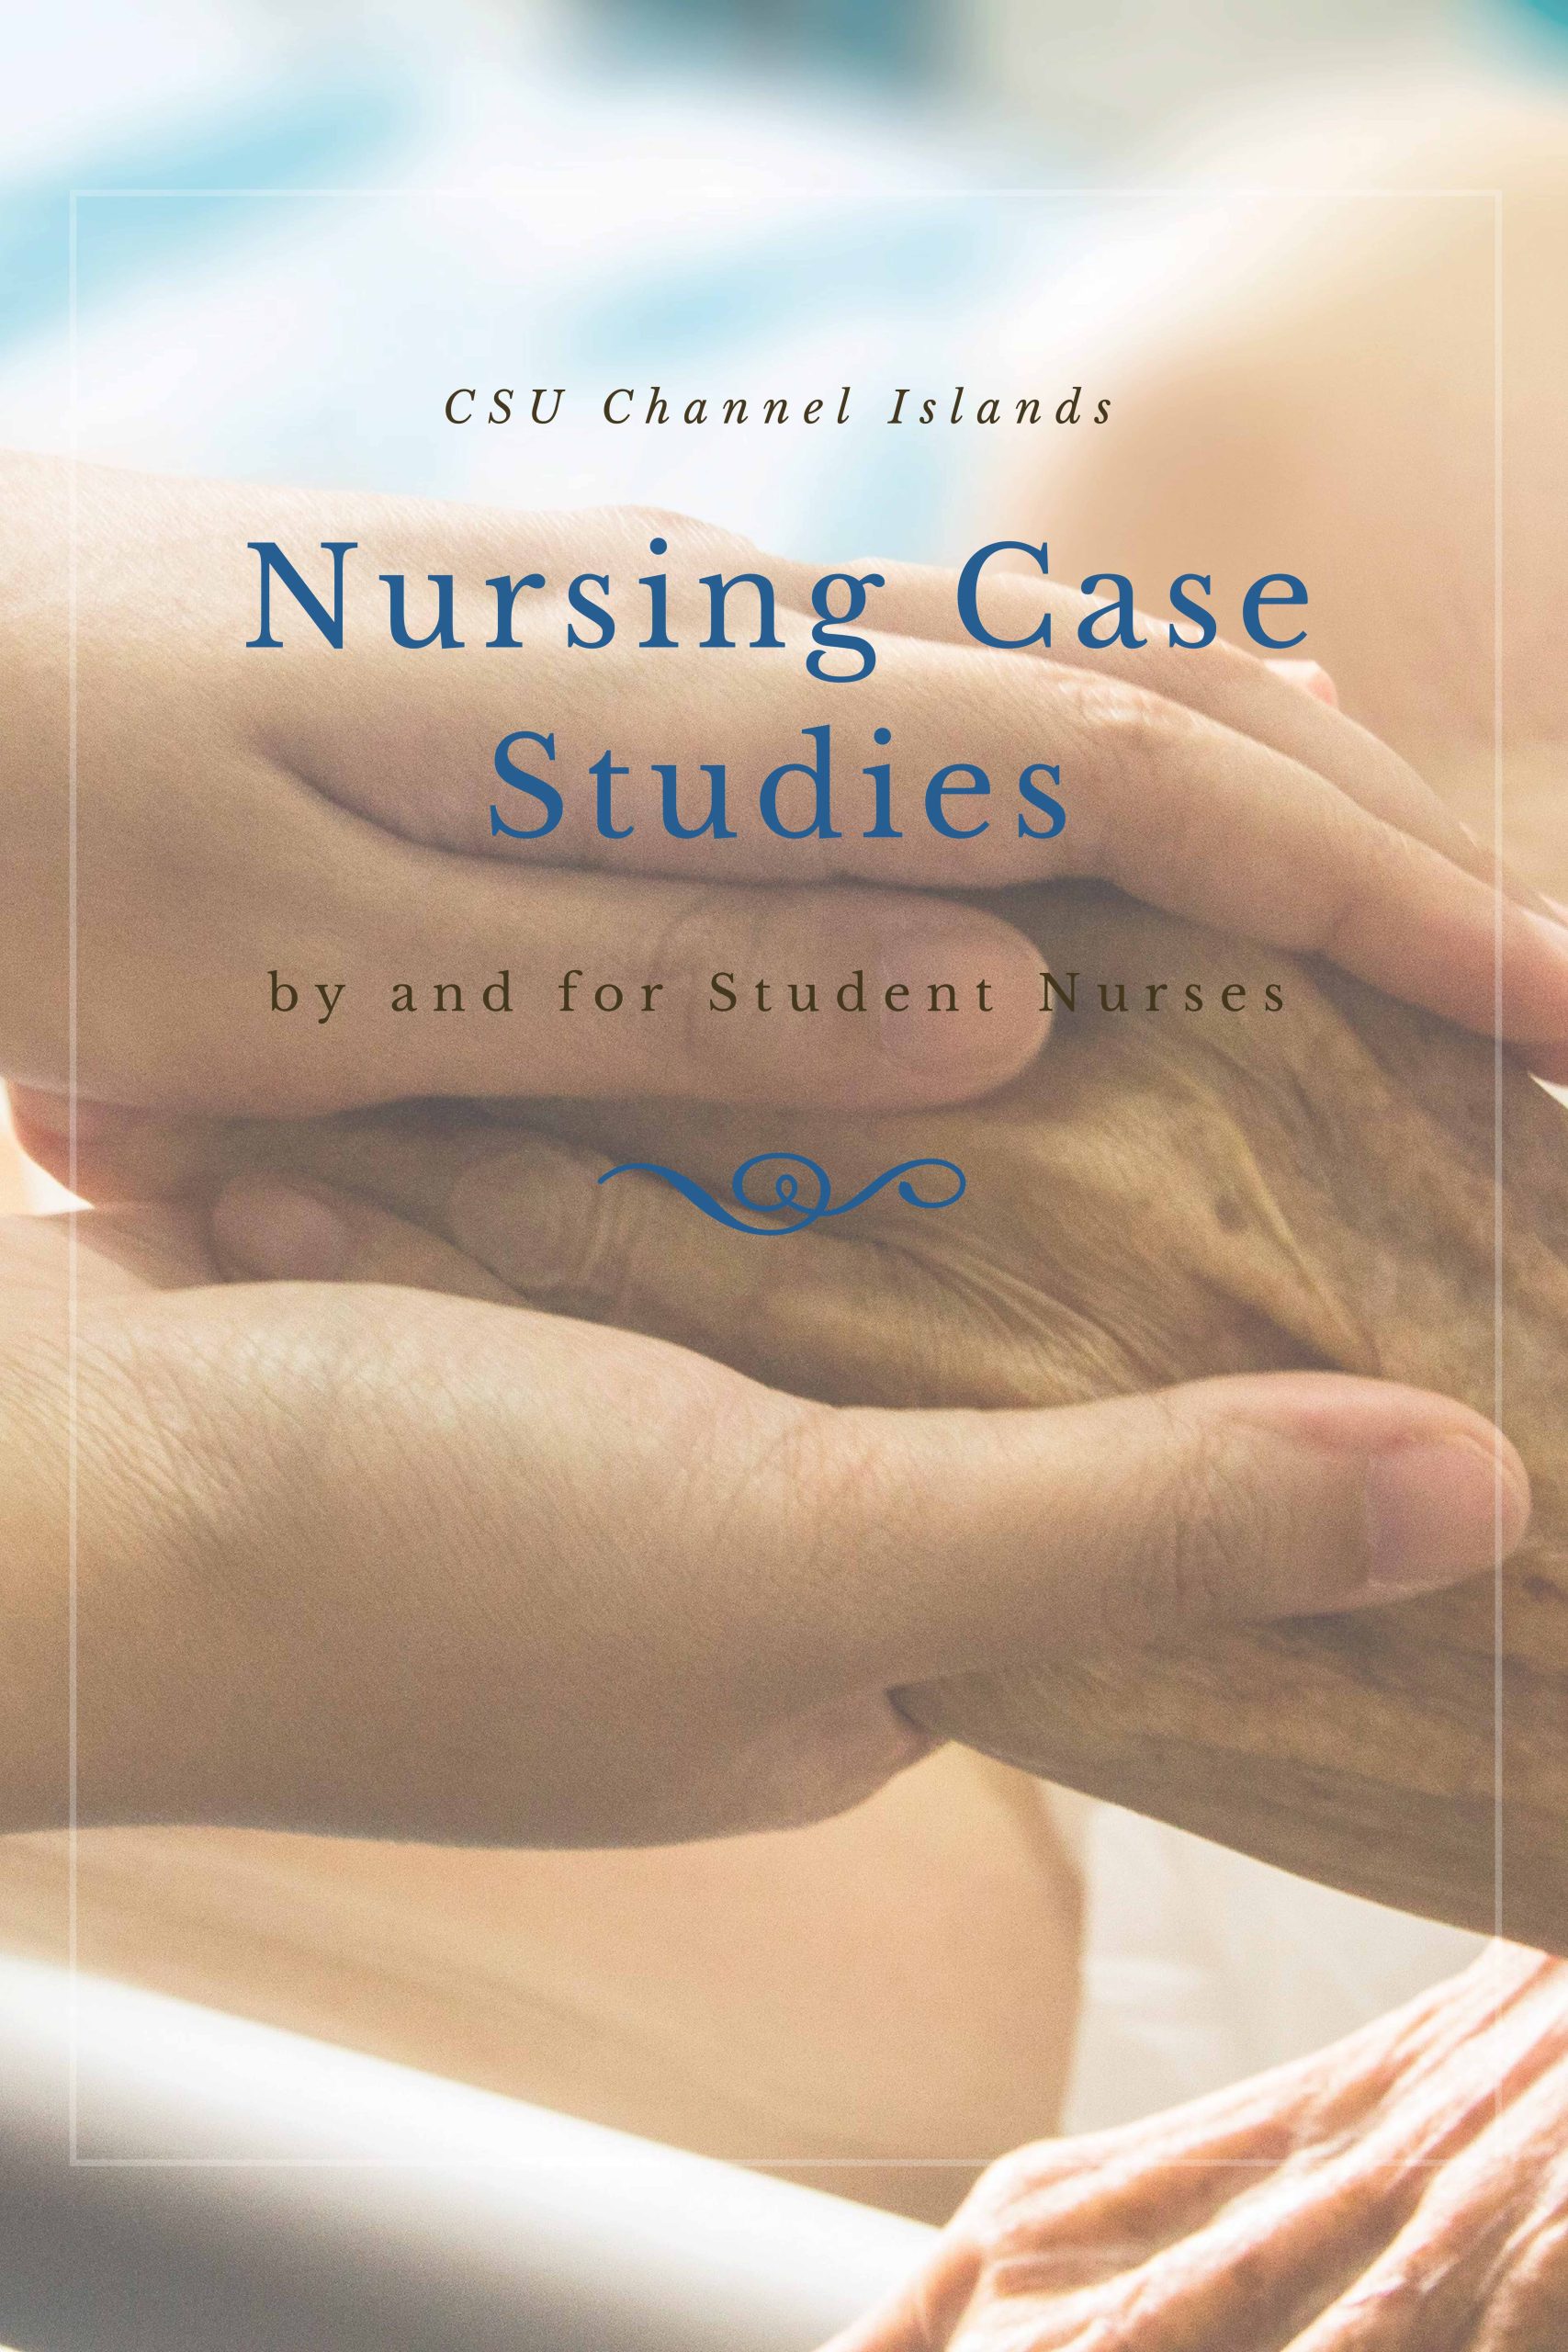 communication case study for nursing students